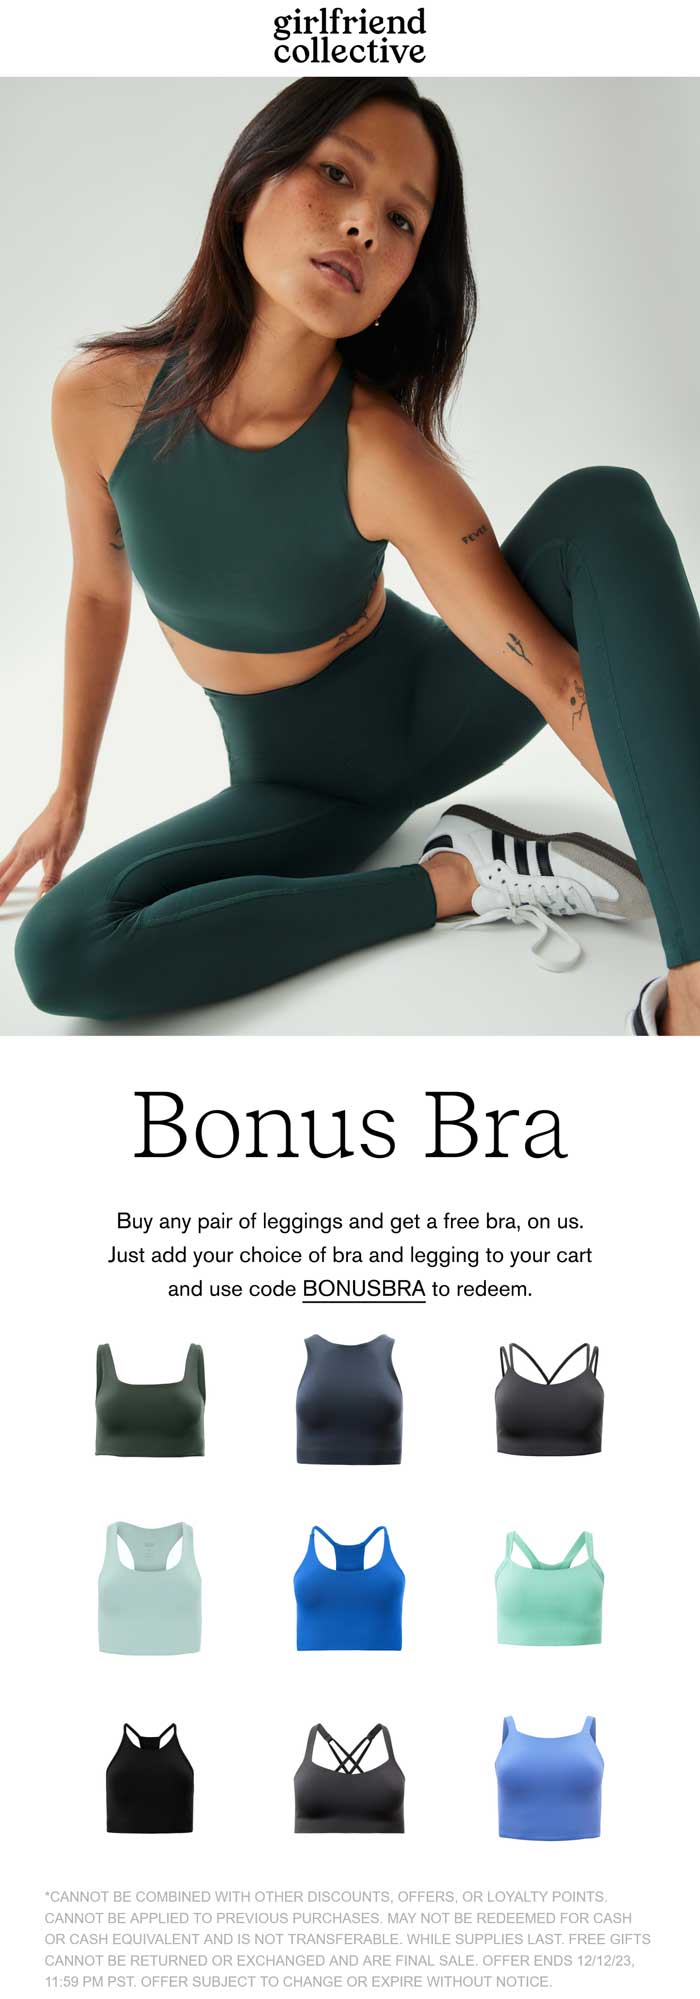 Free bra with your leggings at Girlfriend Collective via promo code BONUSBRA #girlfriendcollective